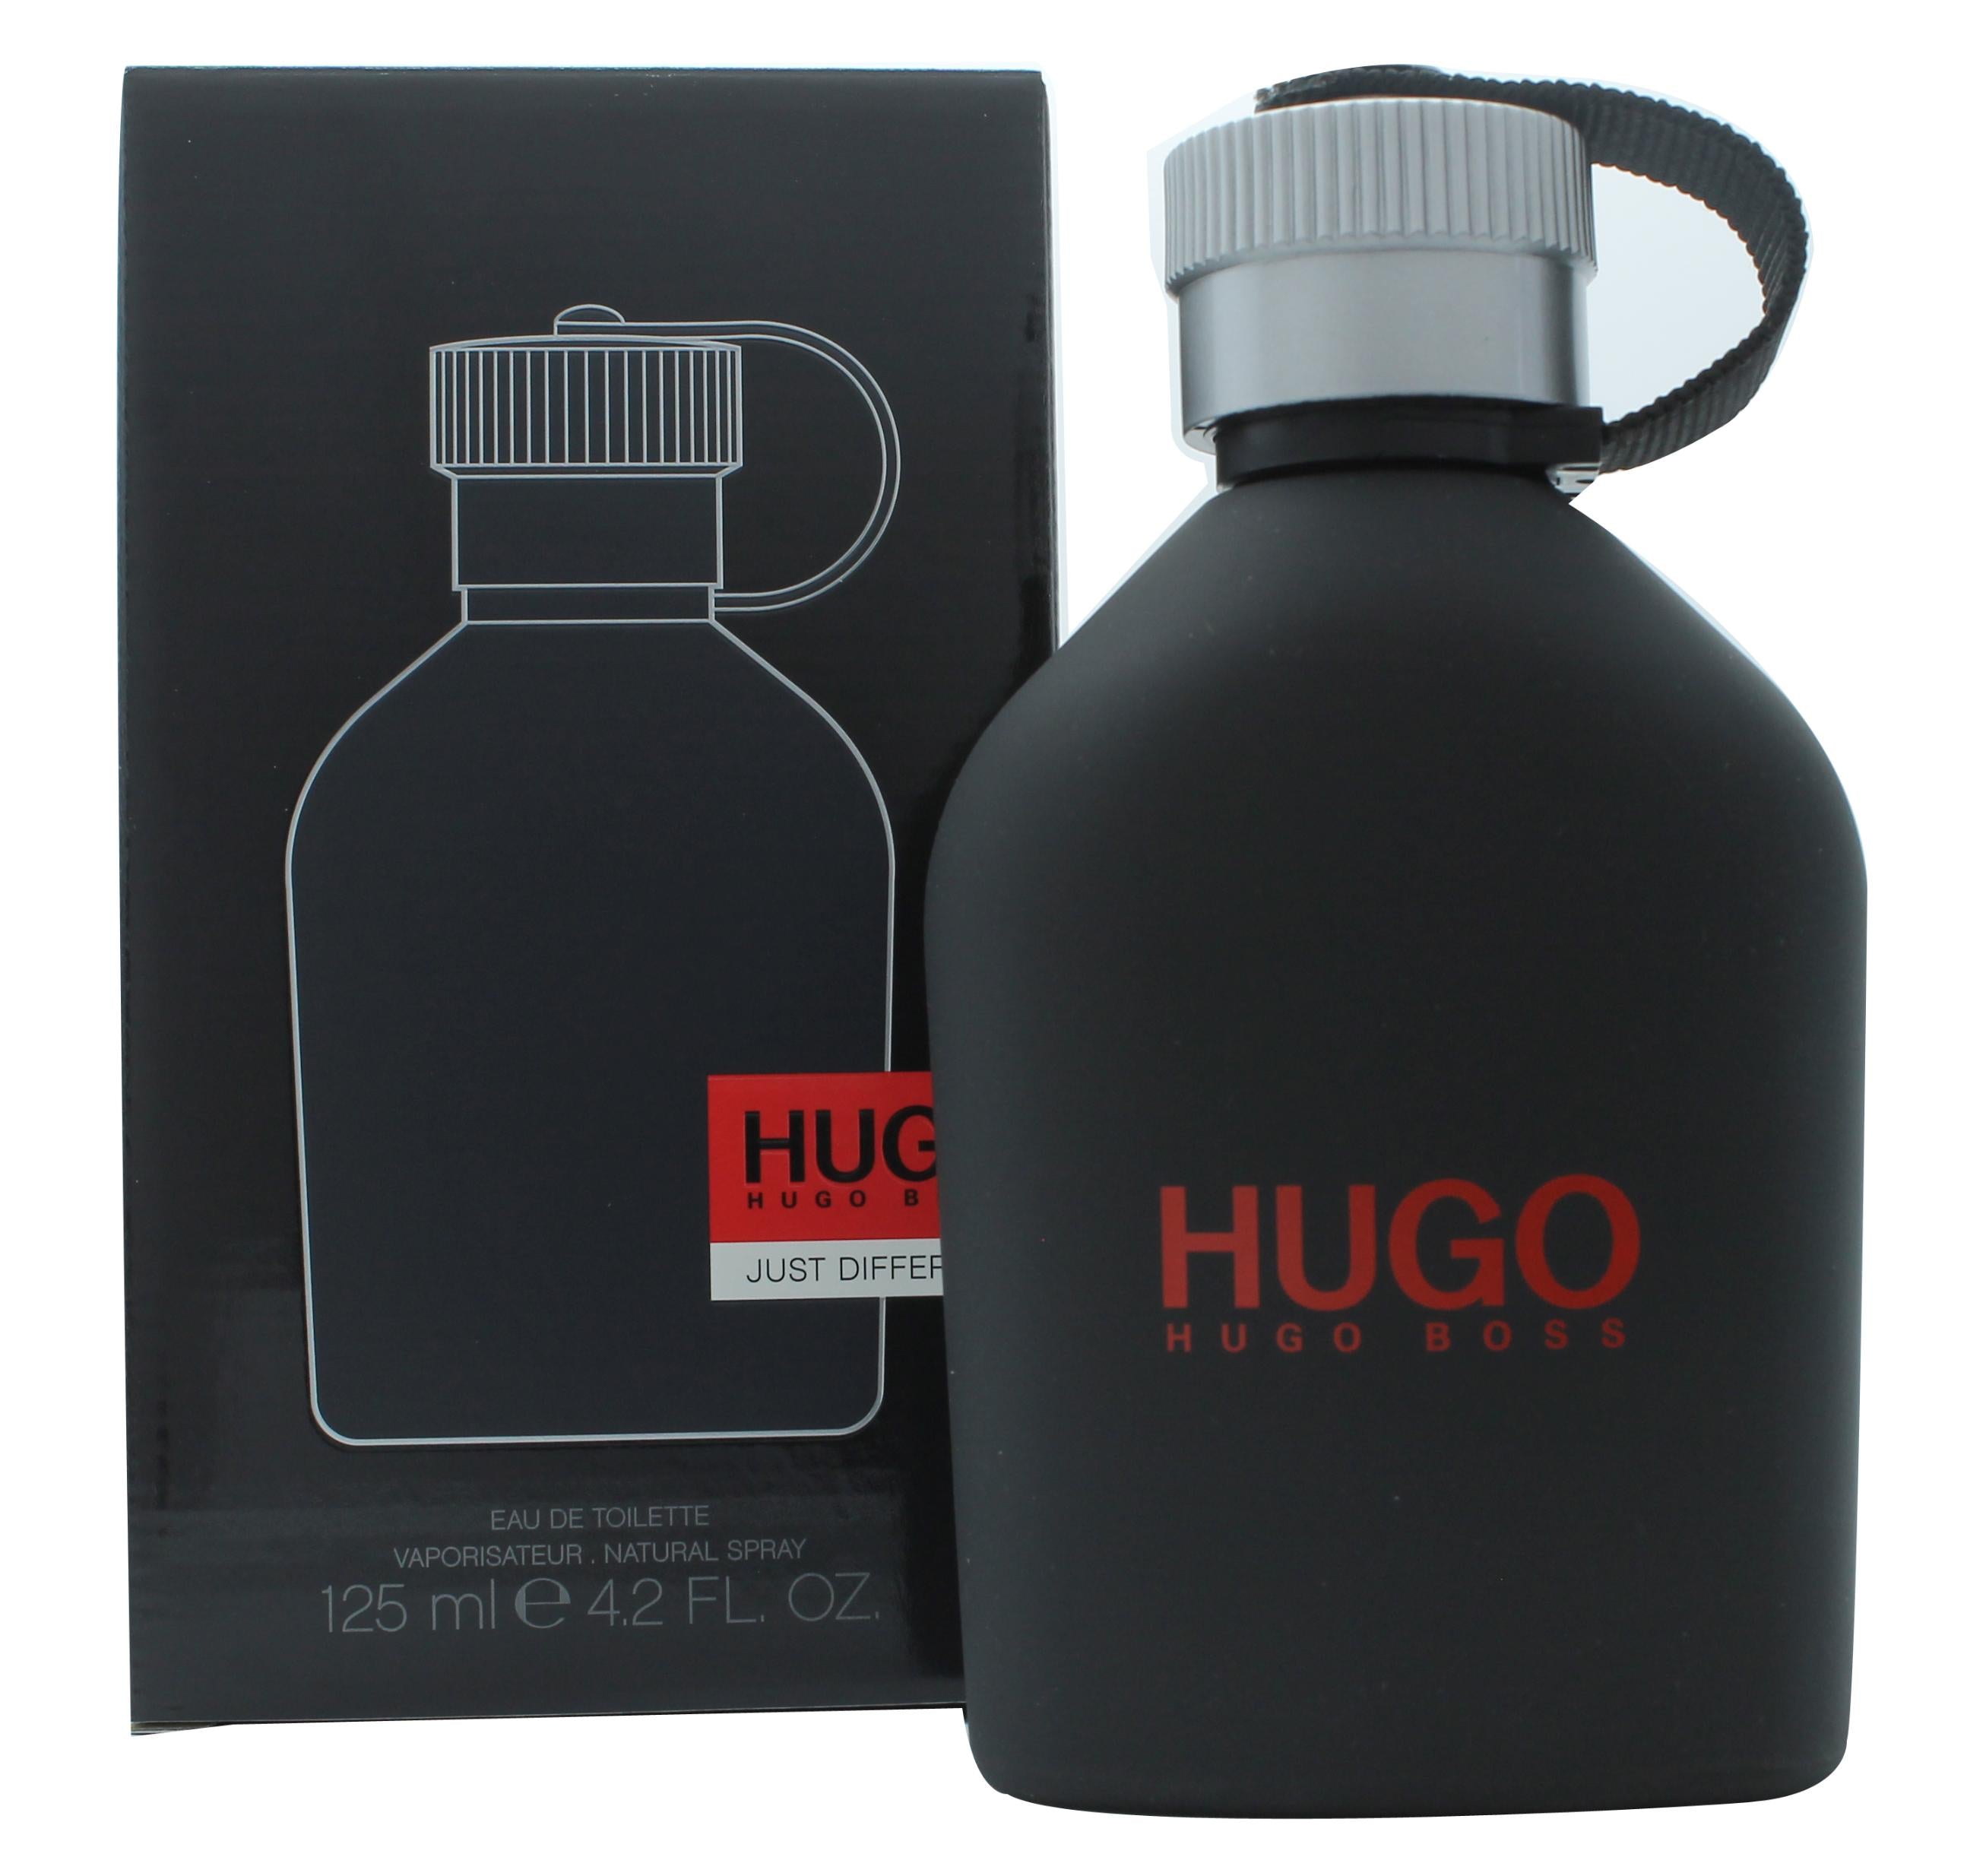 View Hugo Boss Just Different Eau de Toilette 125ml Spray information